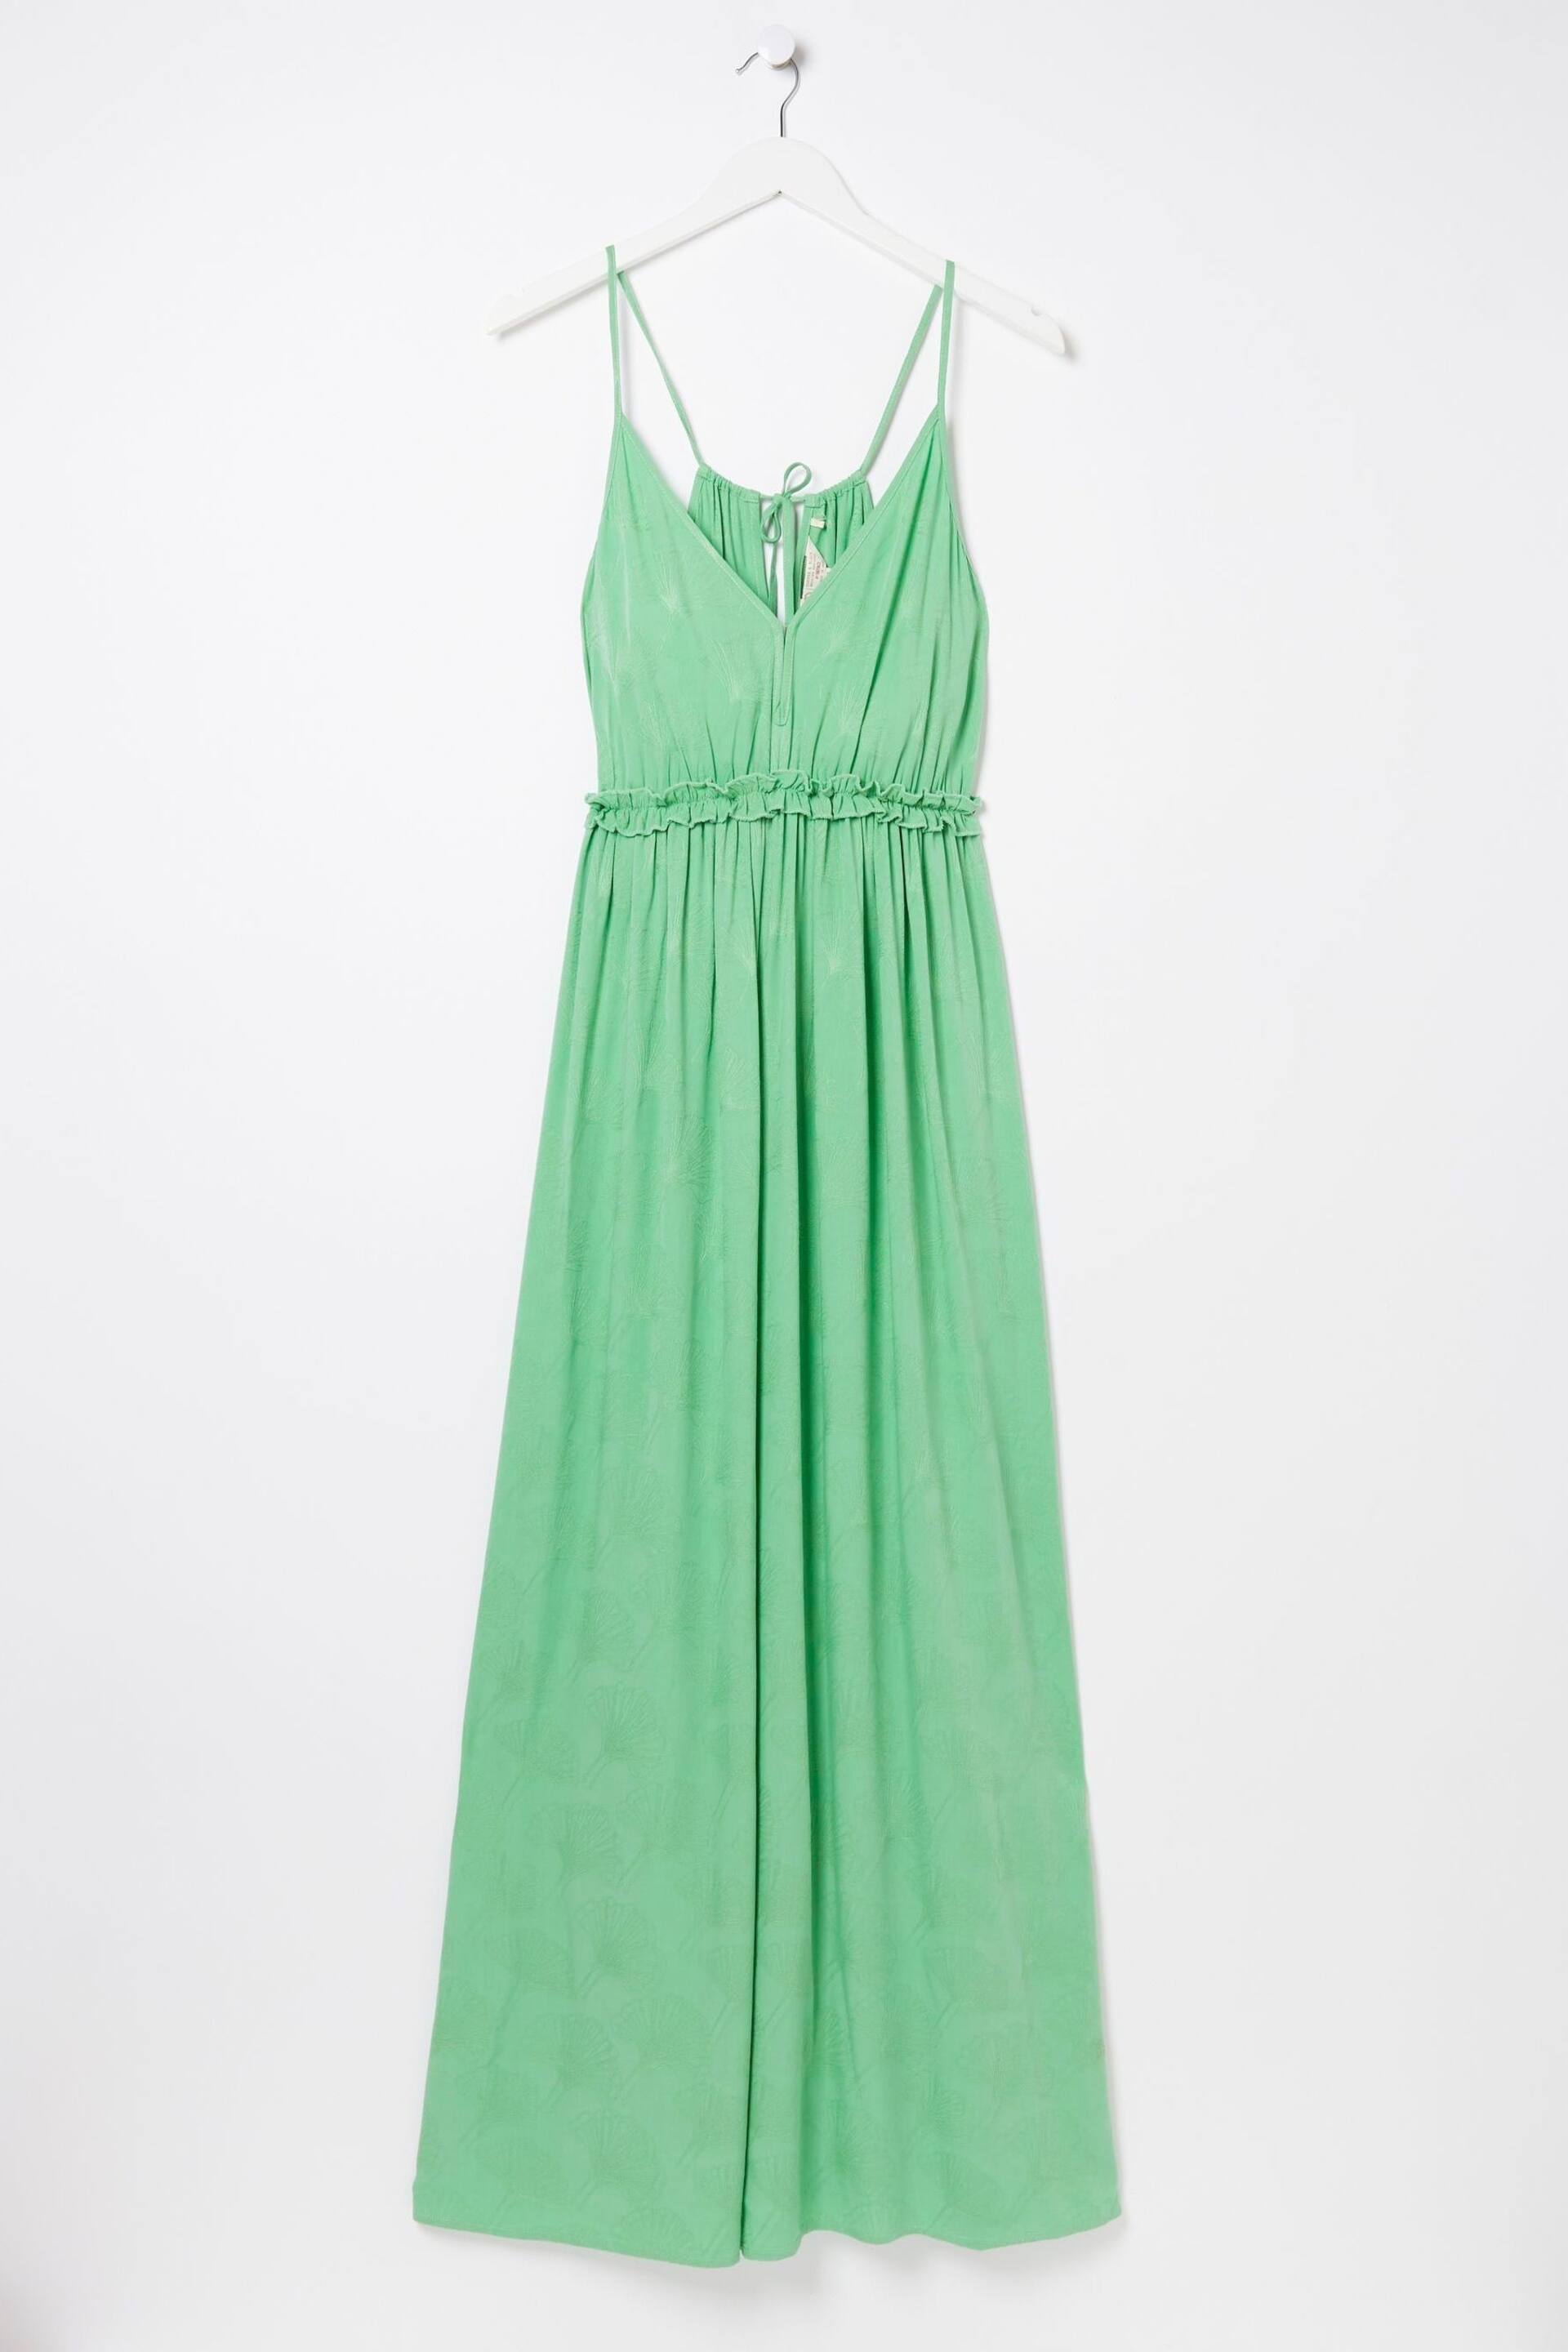 FatFace Green Maxi Dress - Image 7 of 7